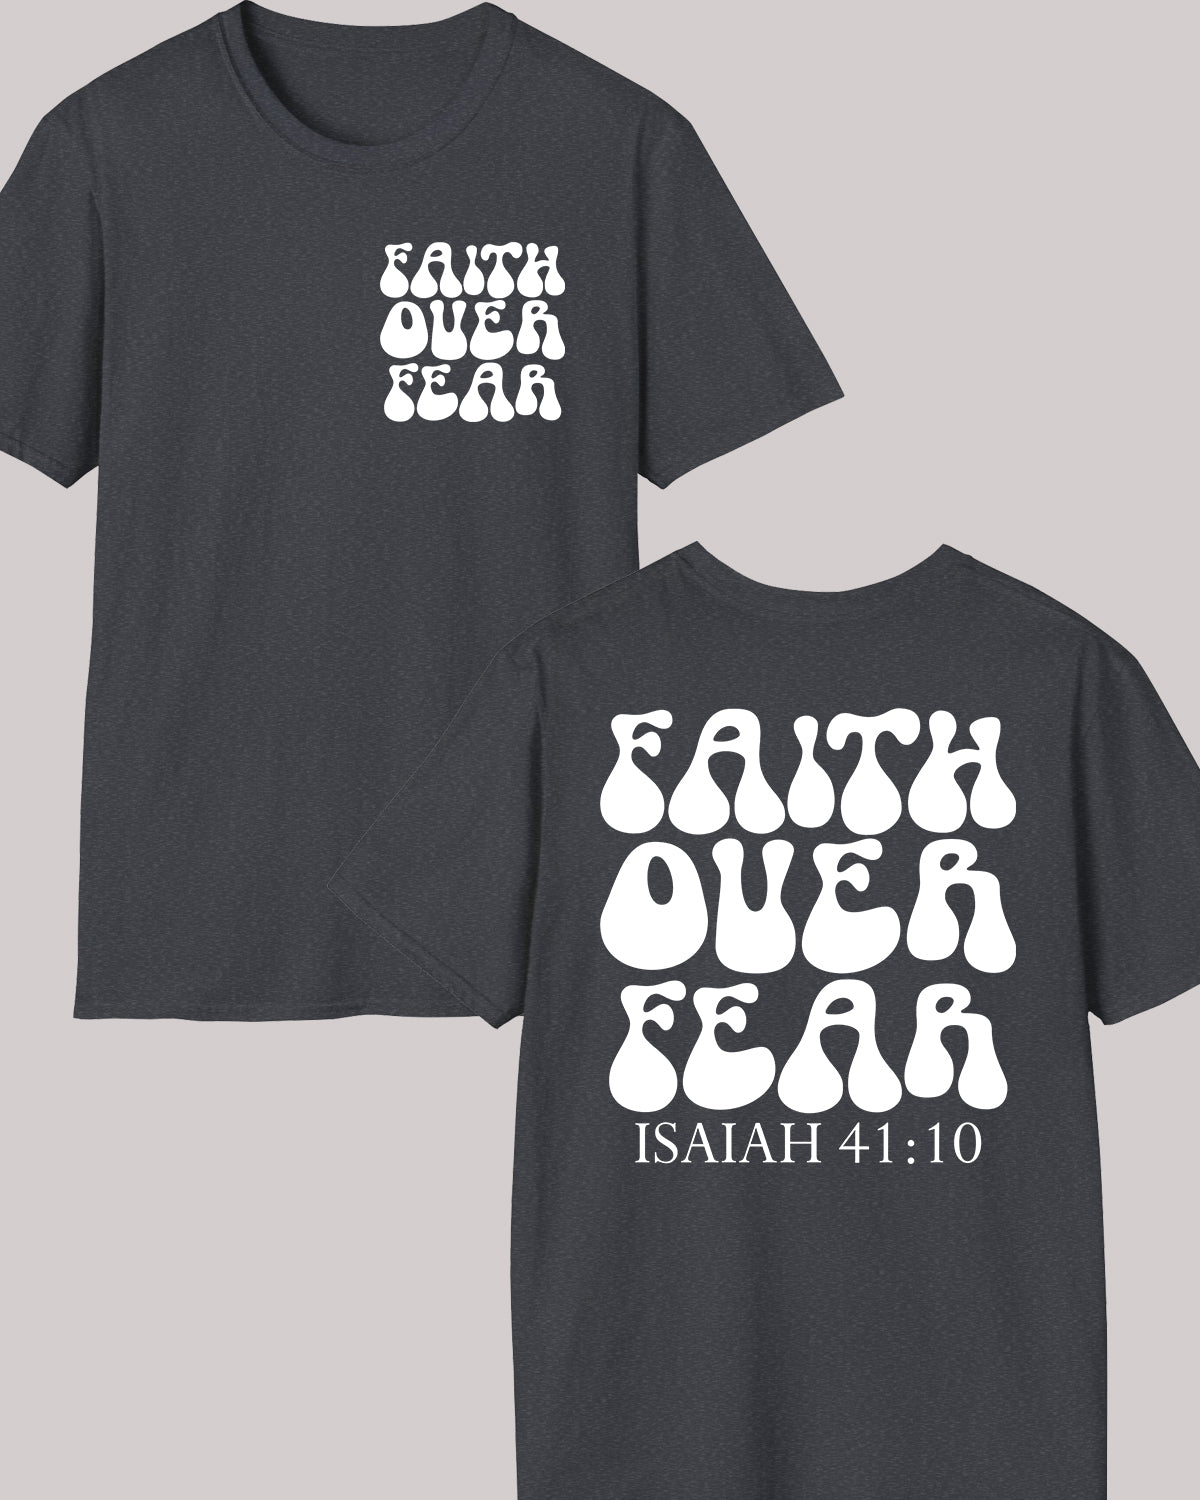 Faith Over fear Christian apparel t shirts Front back